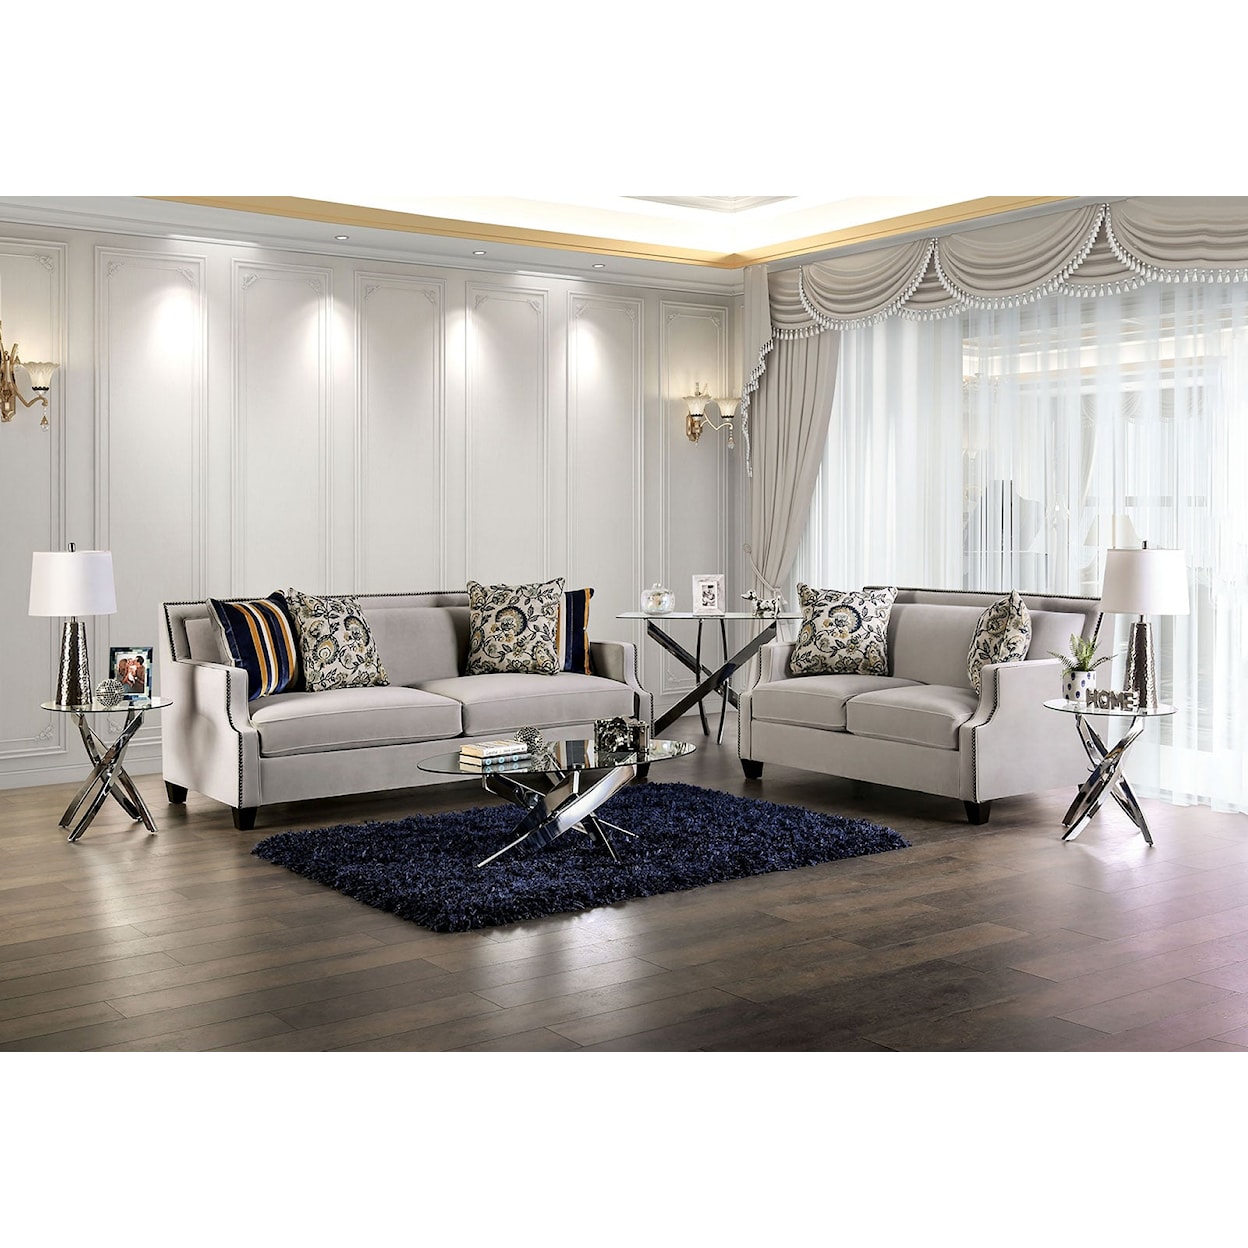 Furniture of America Montecelio 2-Piece Living Room Set